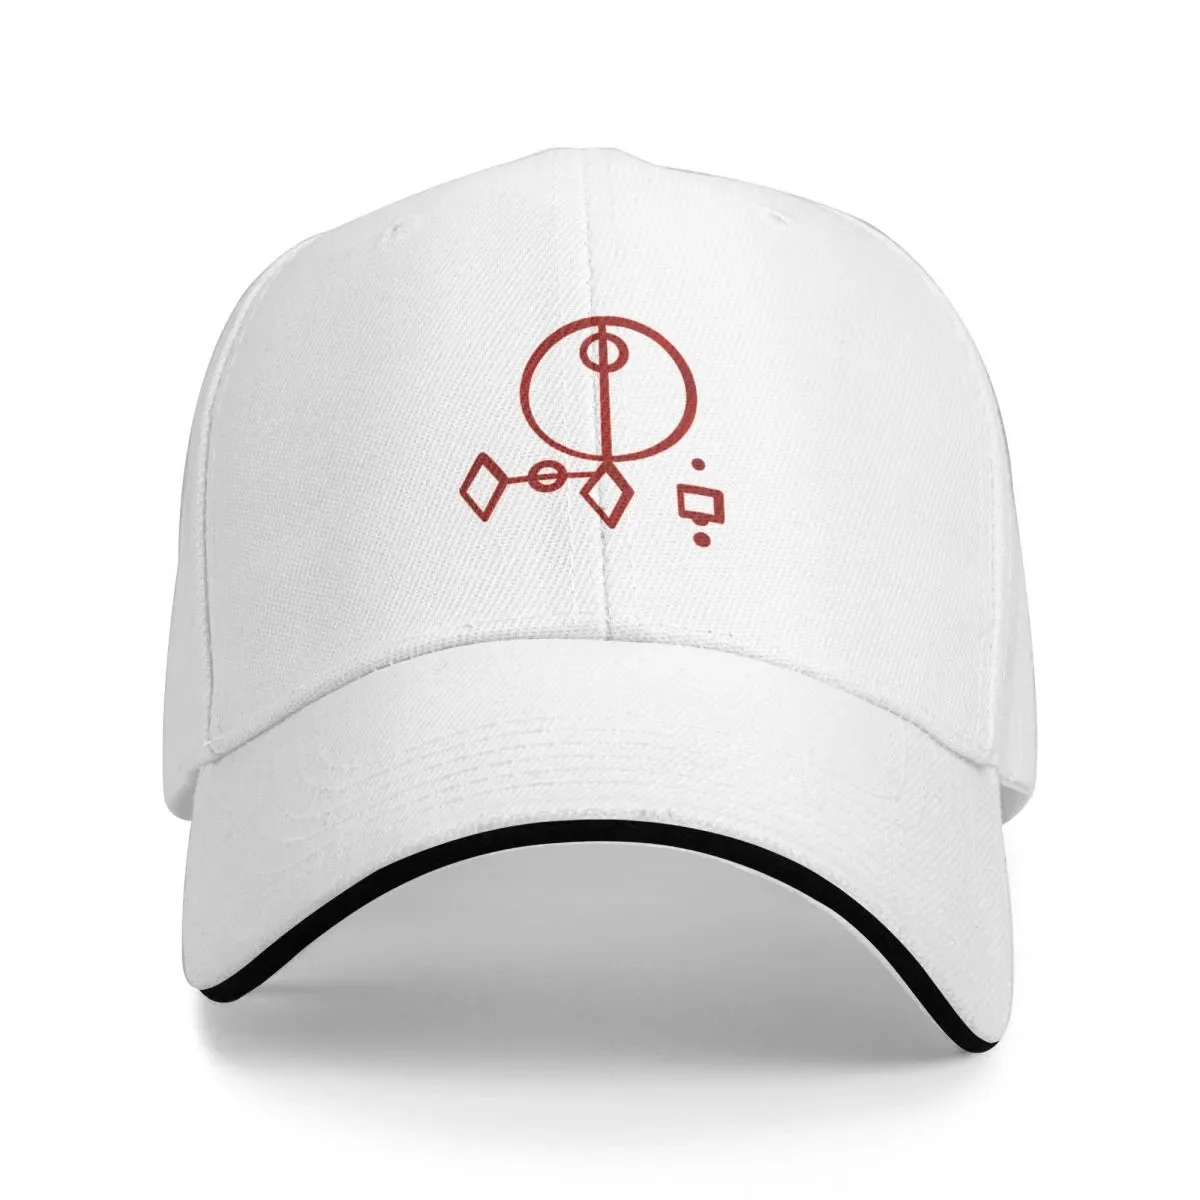 

New Kryptonian Symbol for Hope Cap Baseball Cap ny cap military tactical caps hat for women Men's